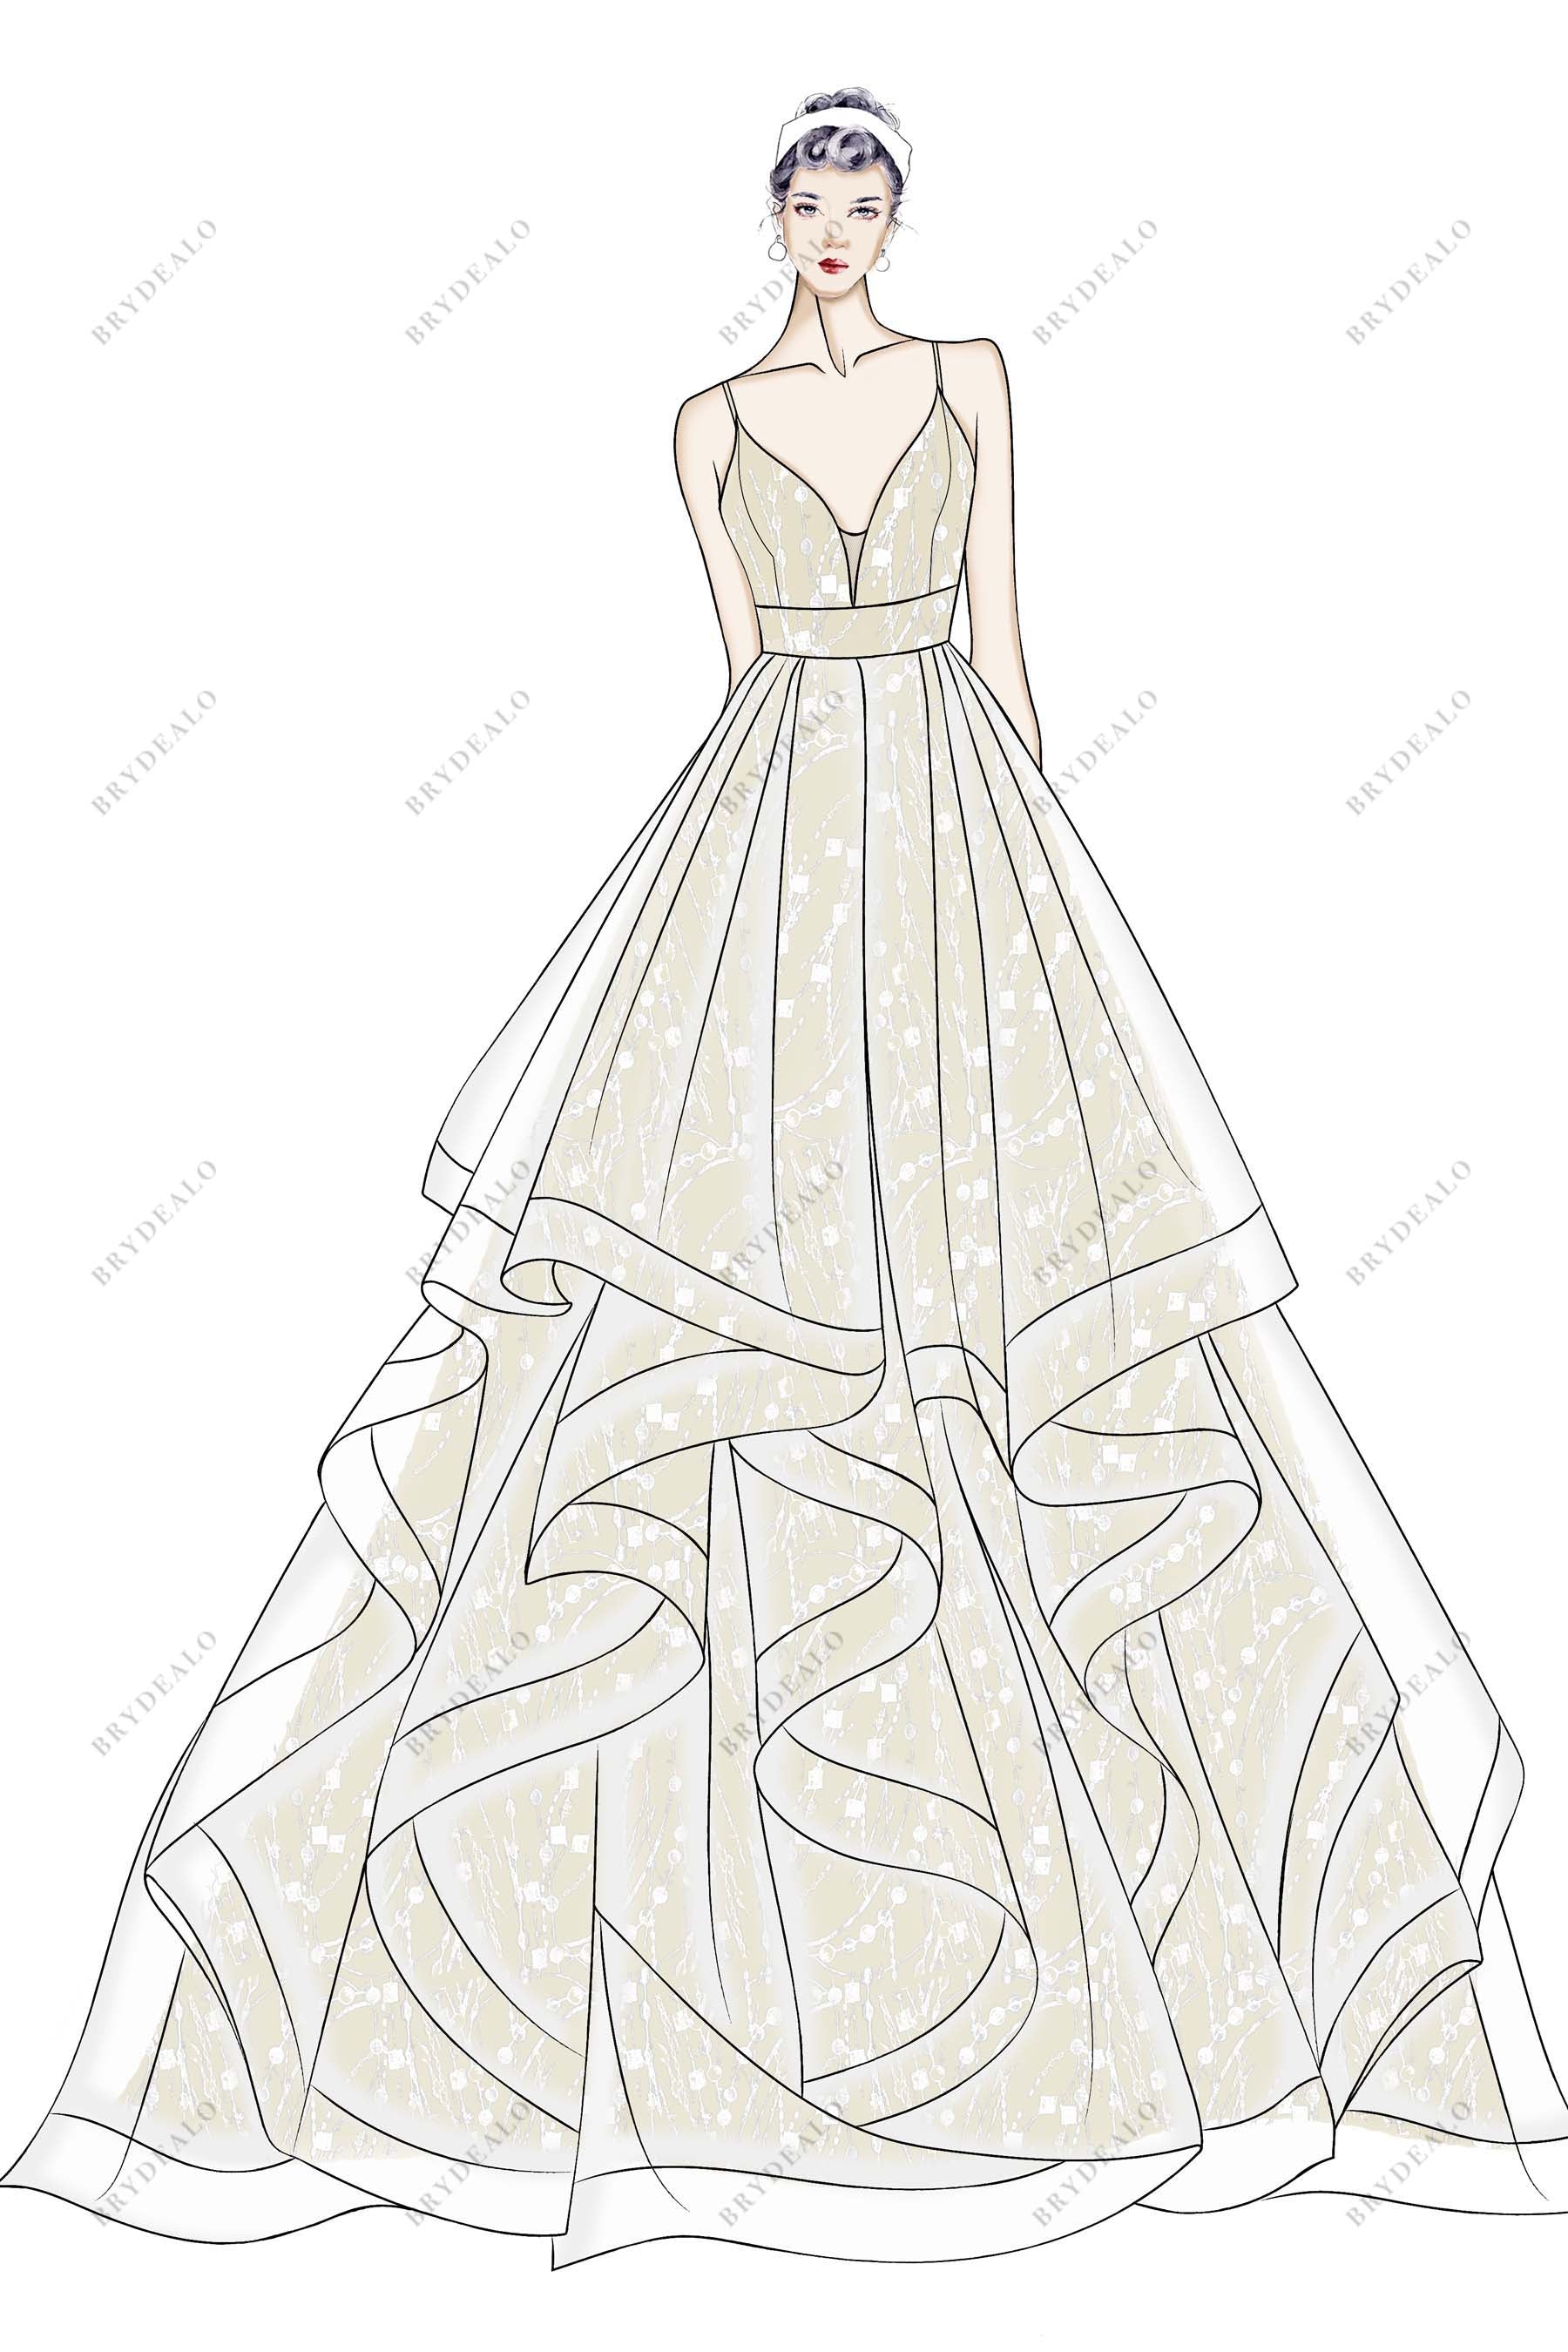 Ivory Sequins Overlaid Champagne Wedding Dress Sketch